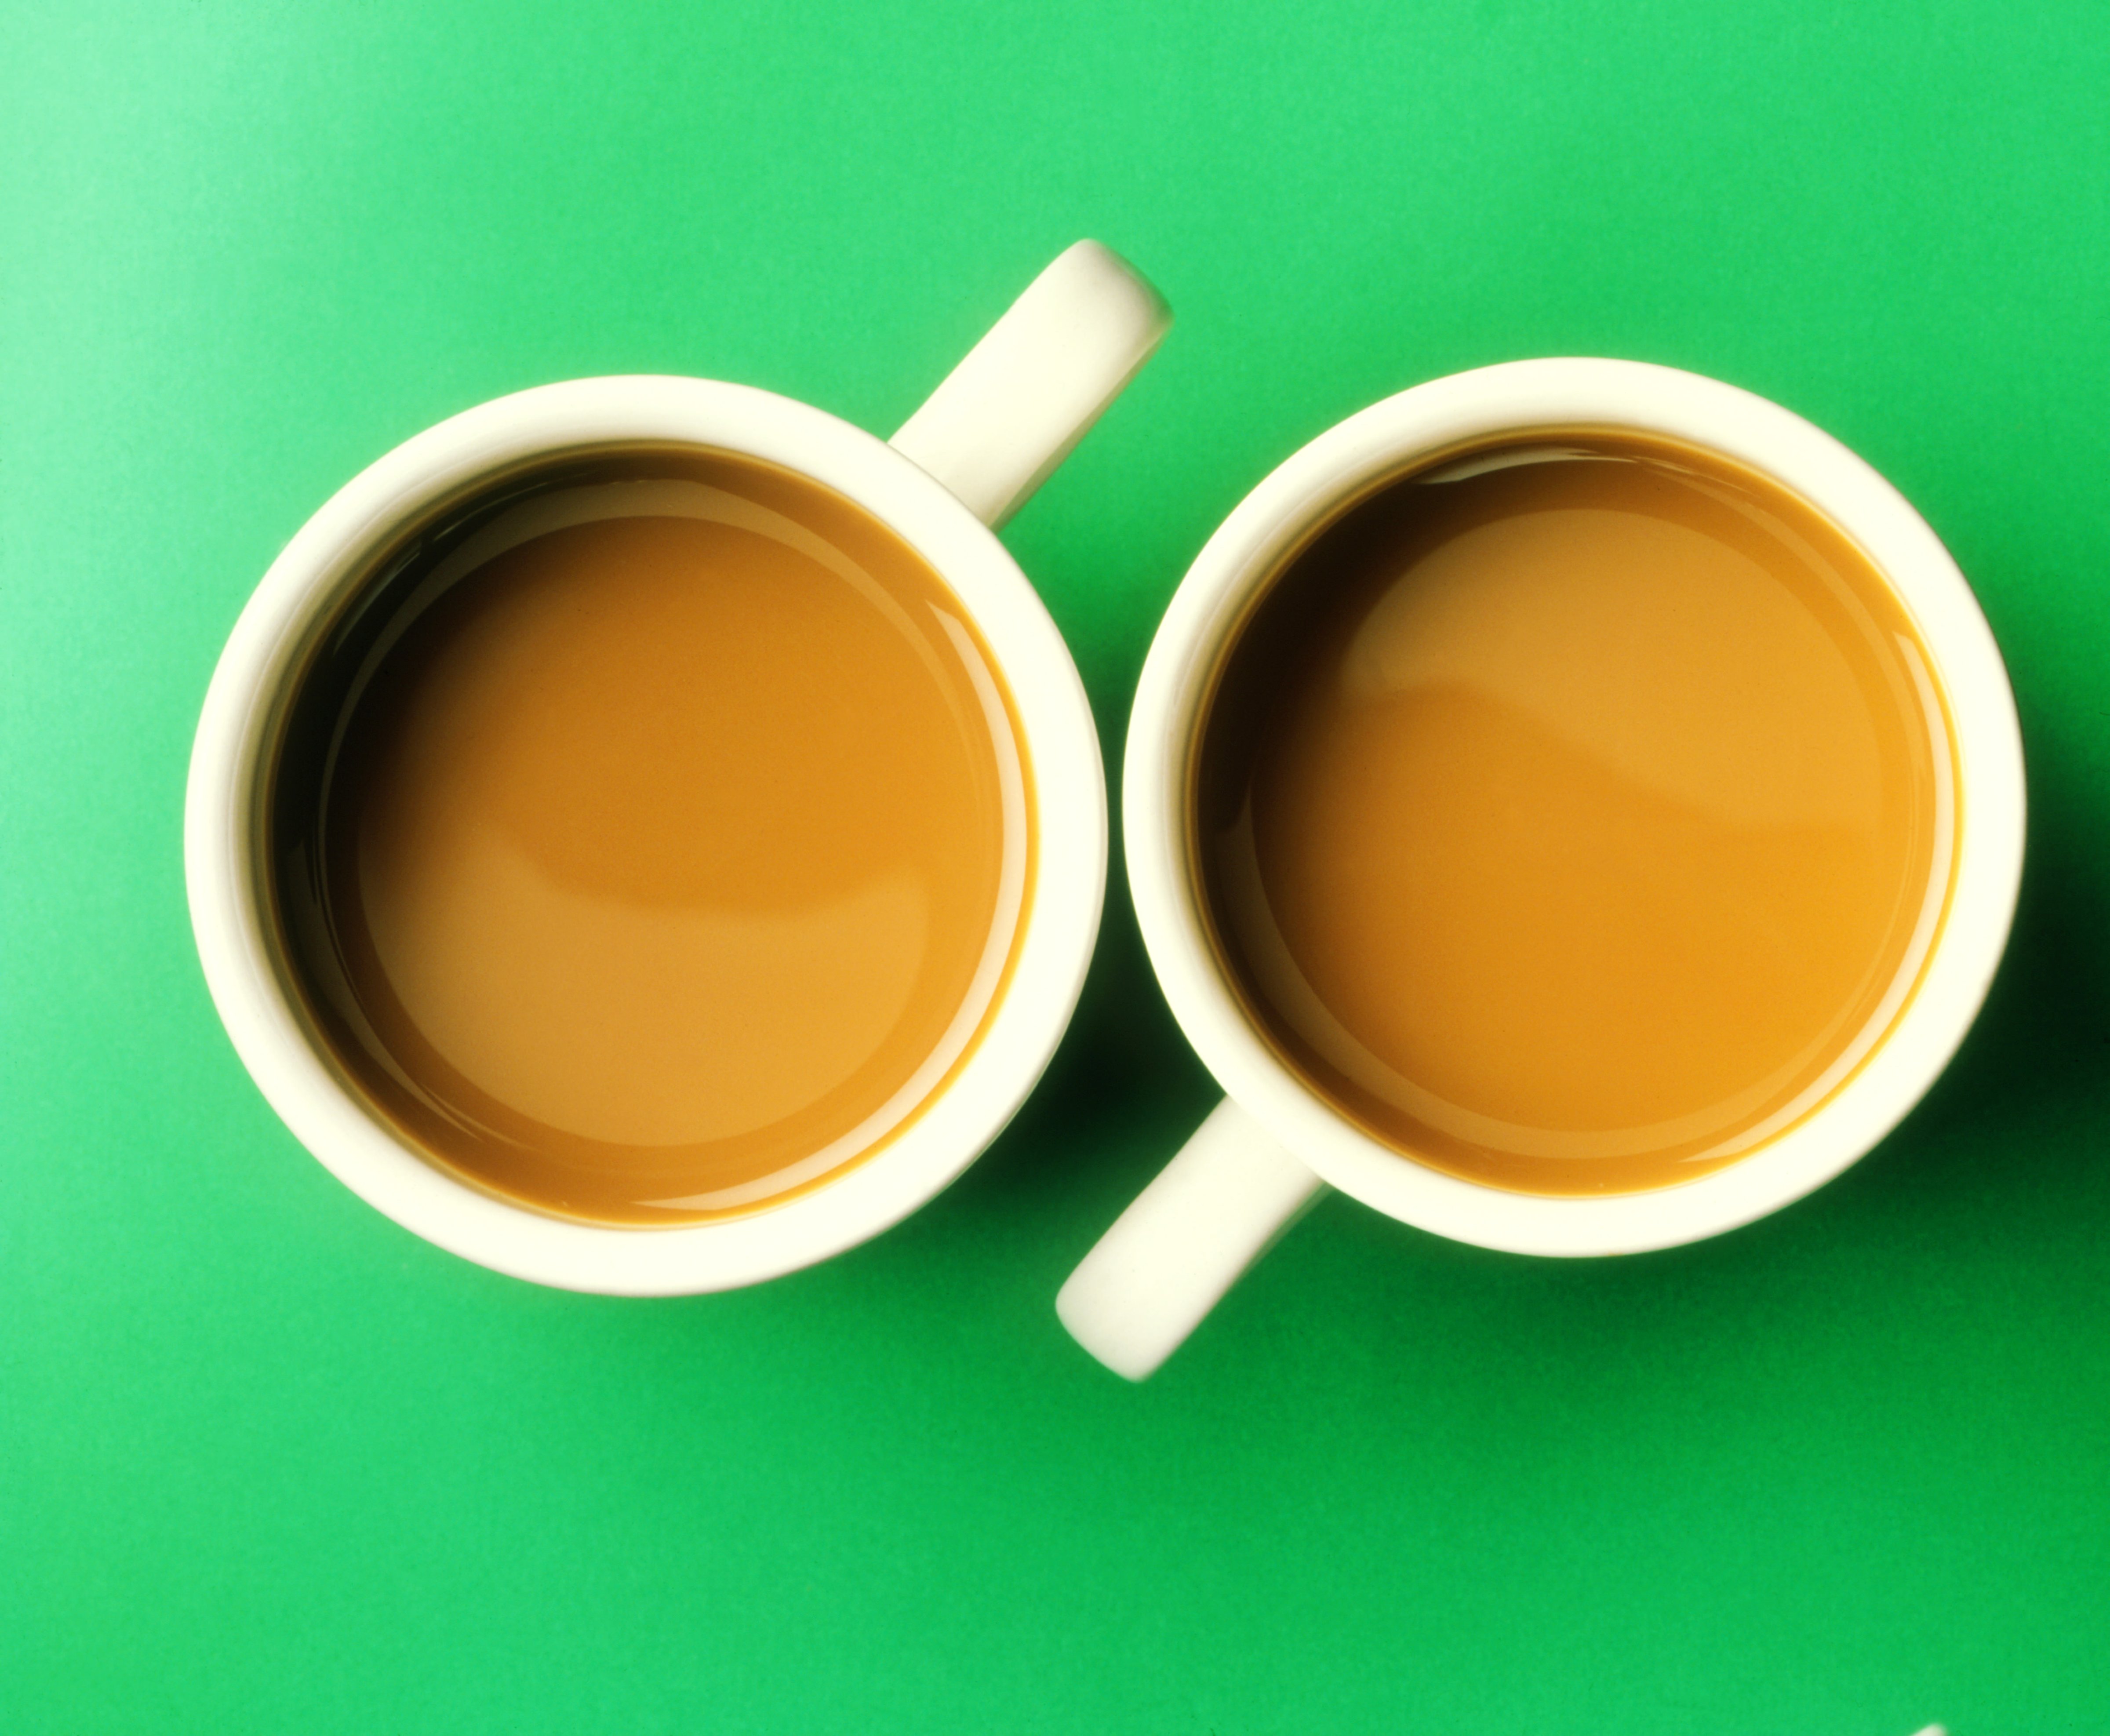 Two mugs of tea or coffee